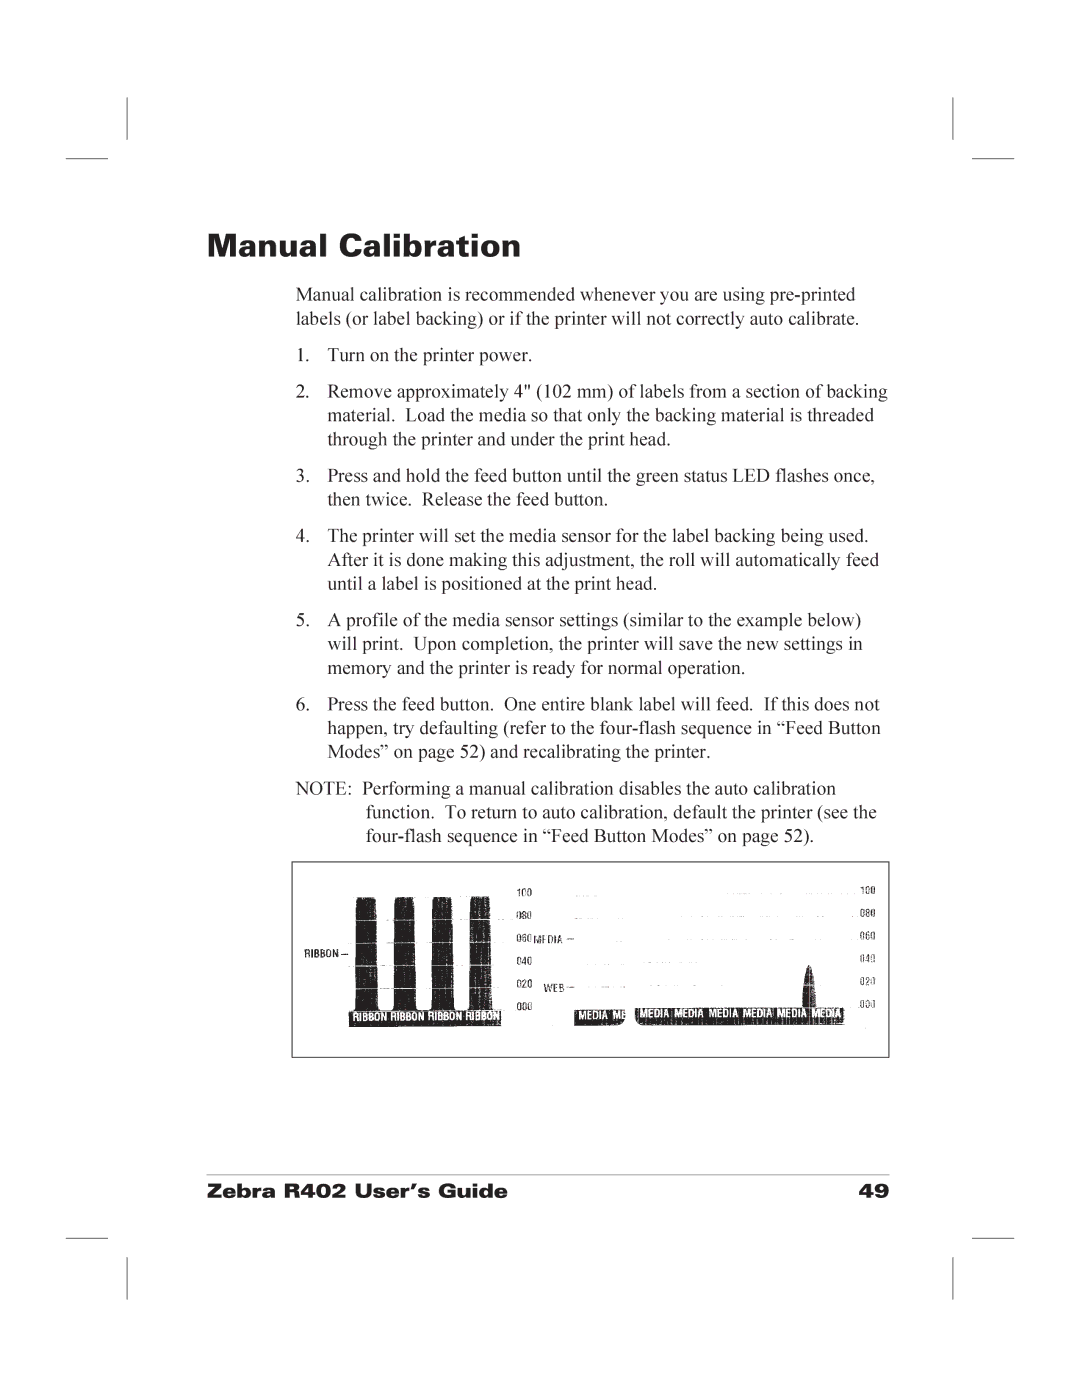 Zebra Technologies R402 manual Manual Calibration 